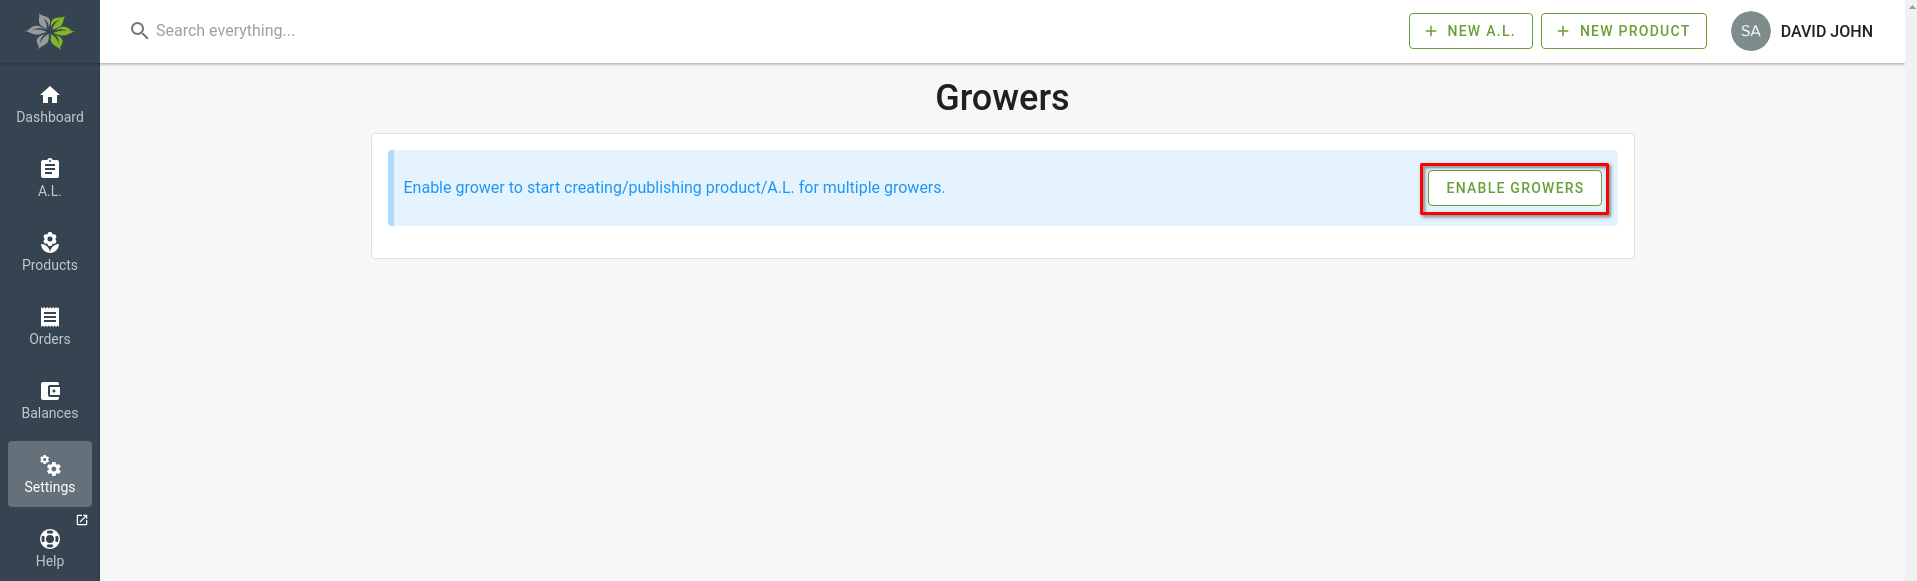 enable growers